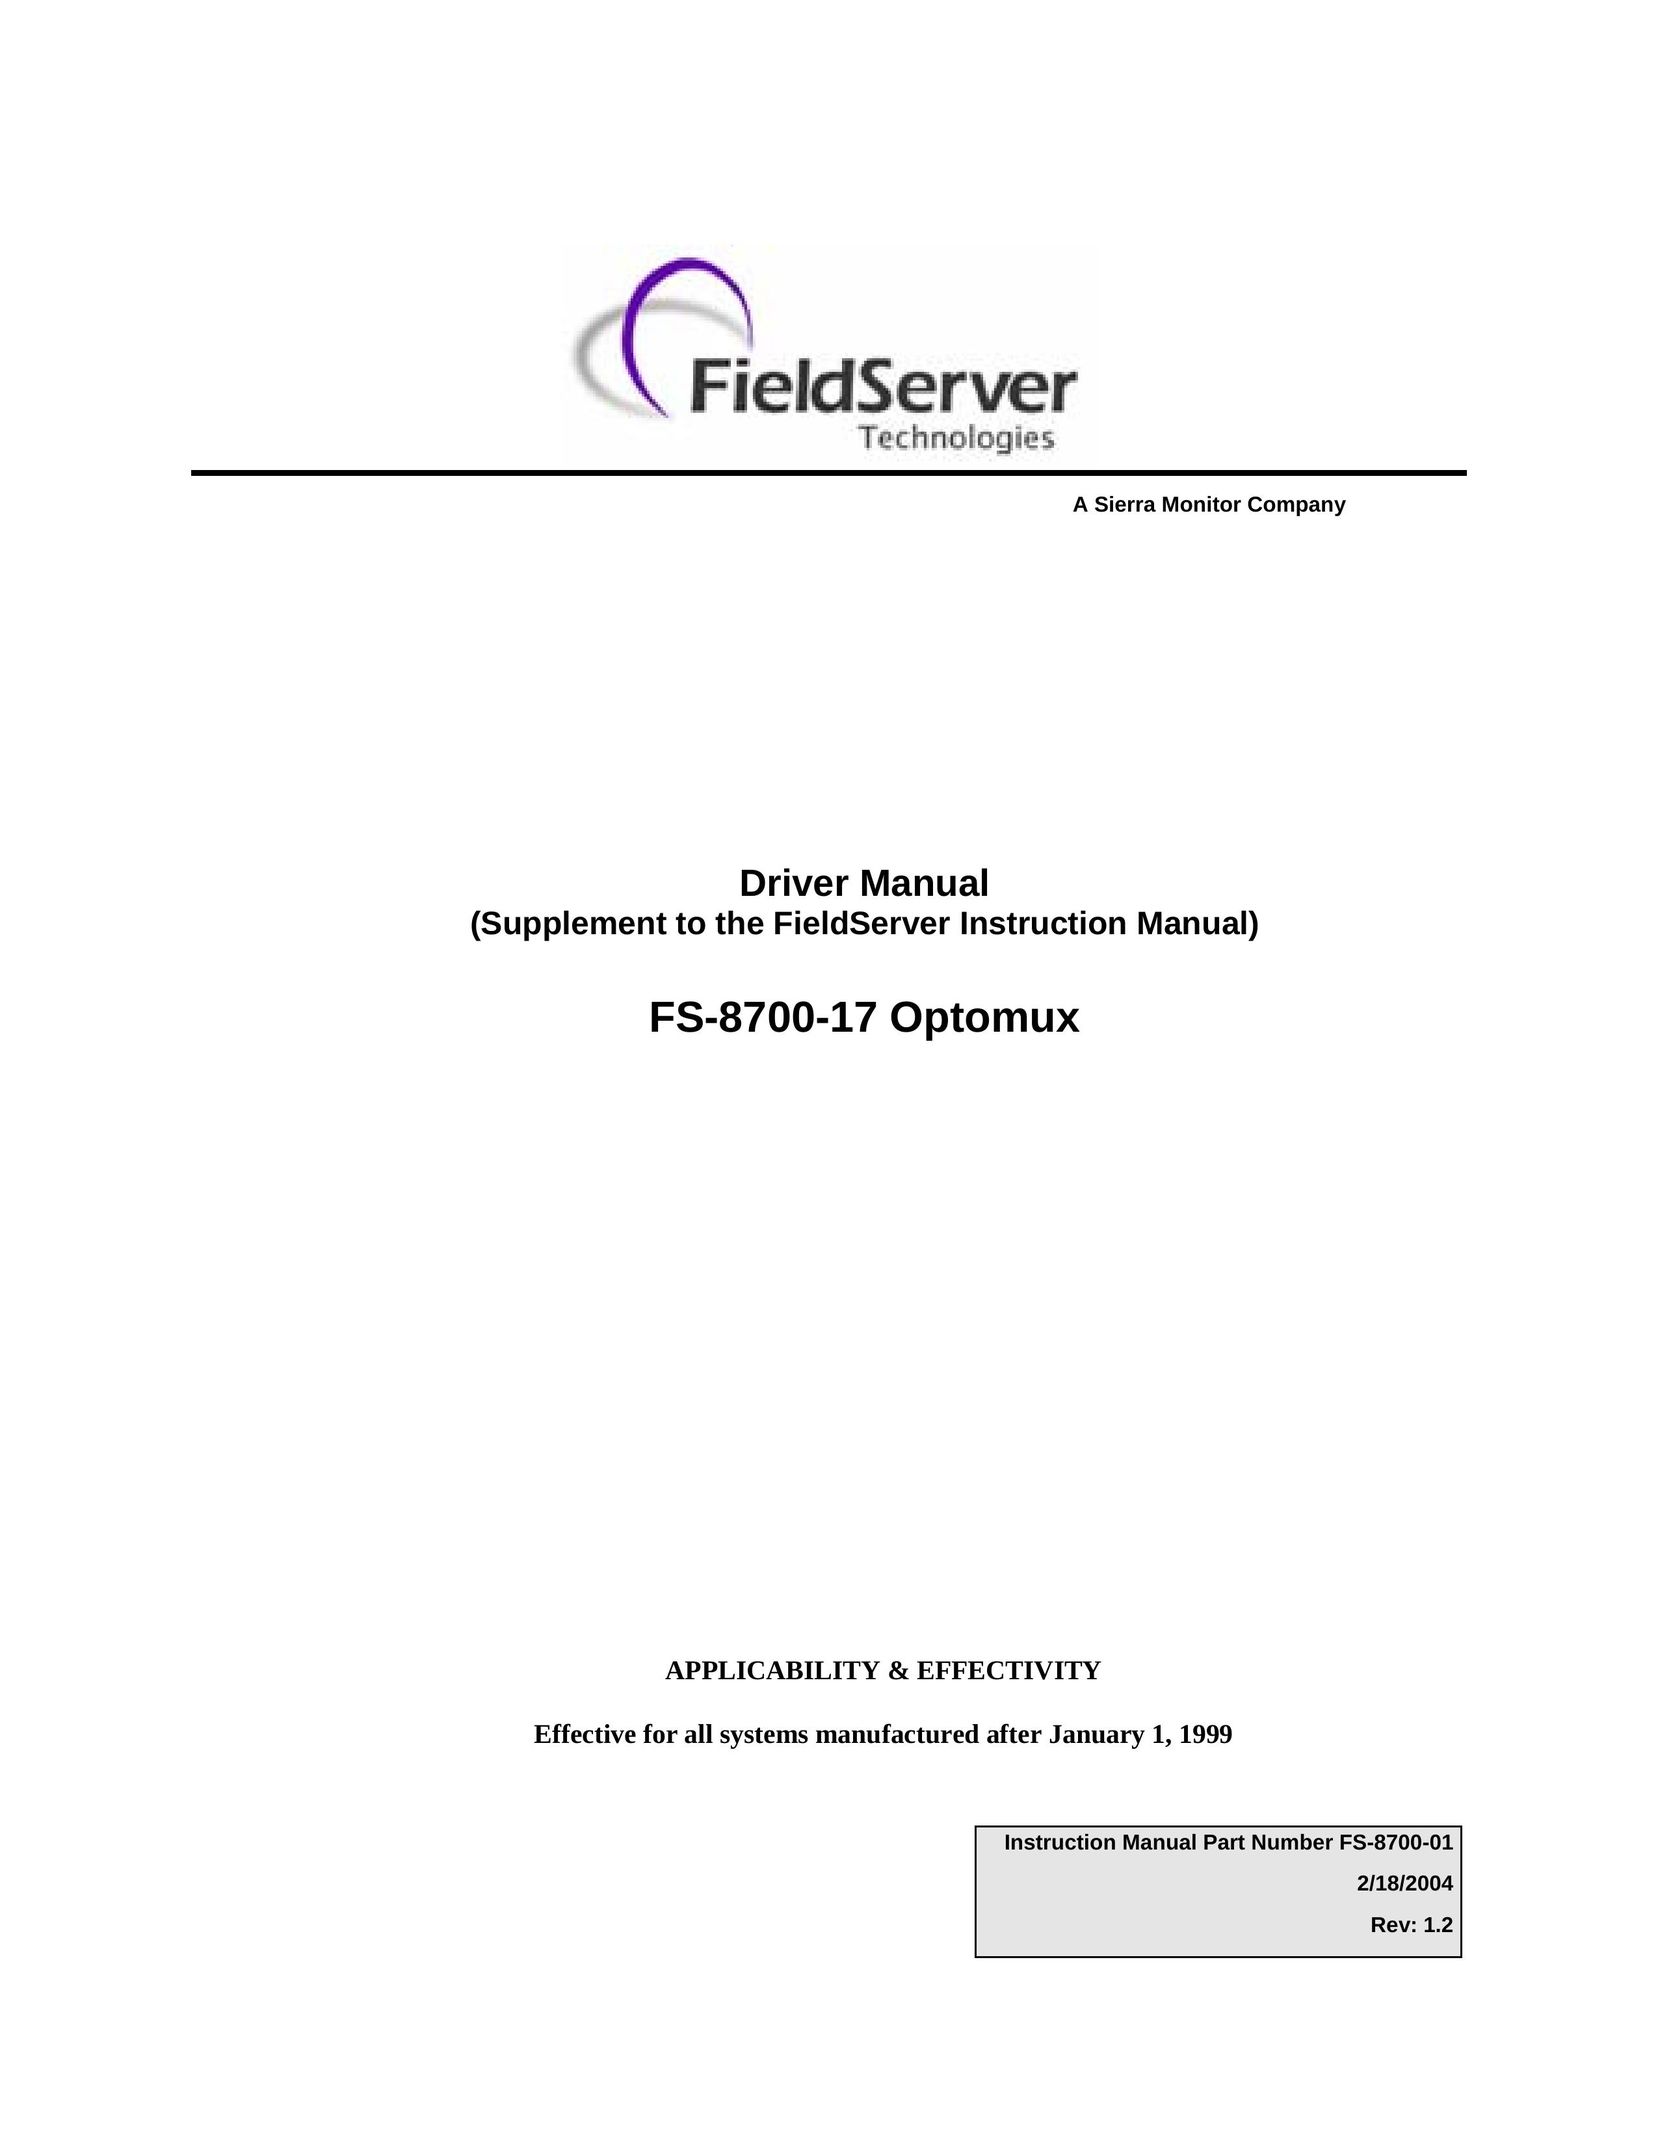 FieldServer FS-8700-17 Computer Drive User Manual